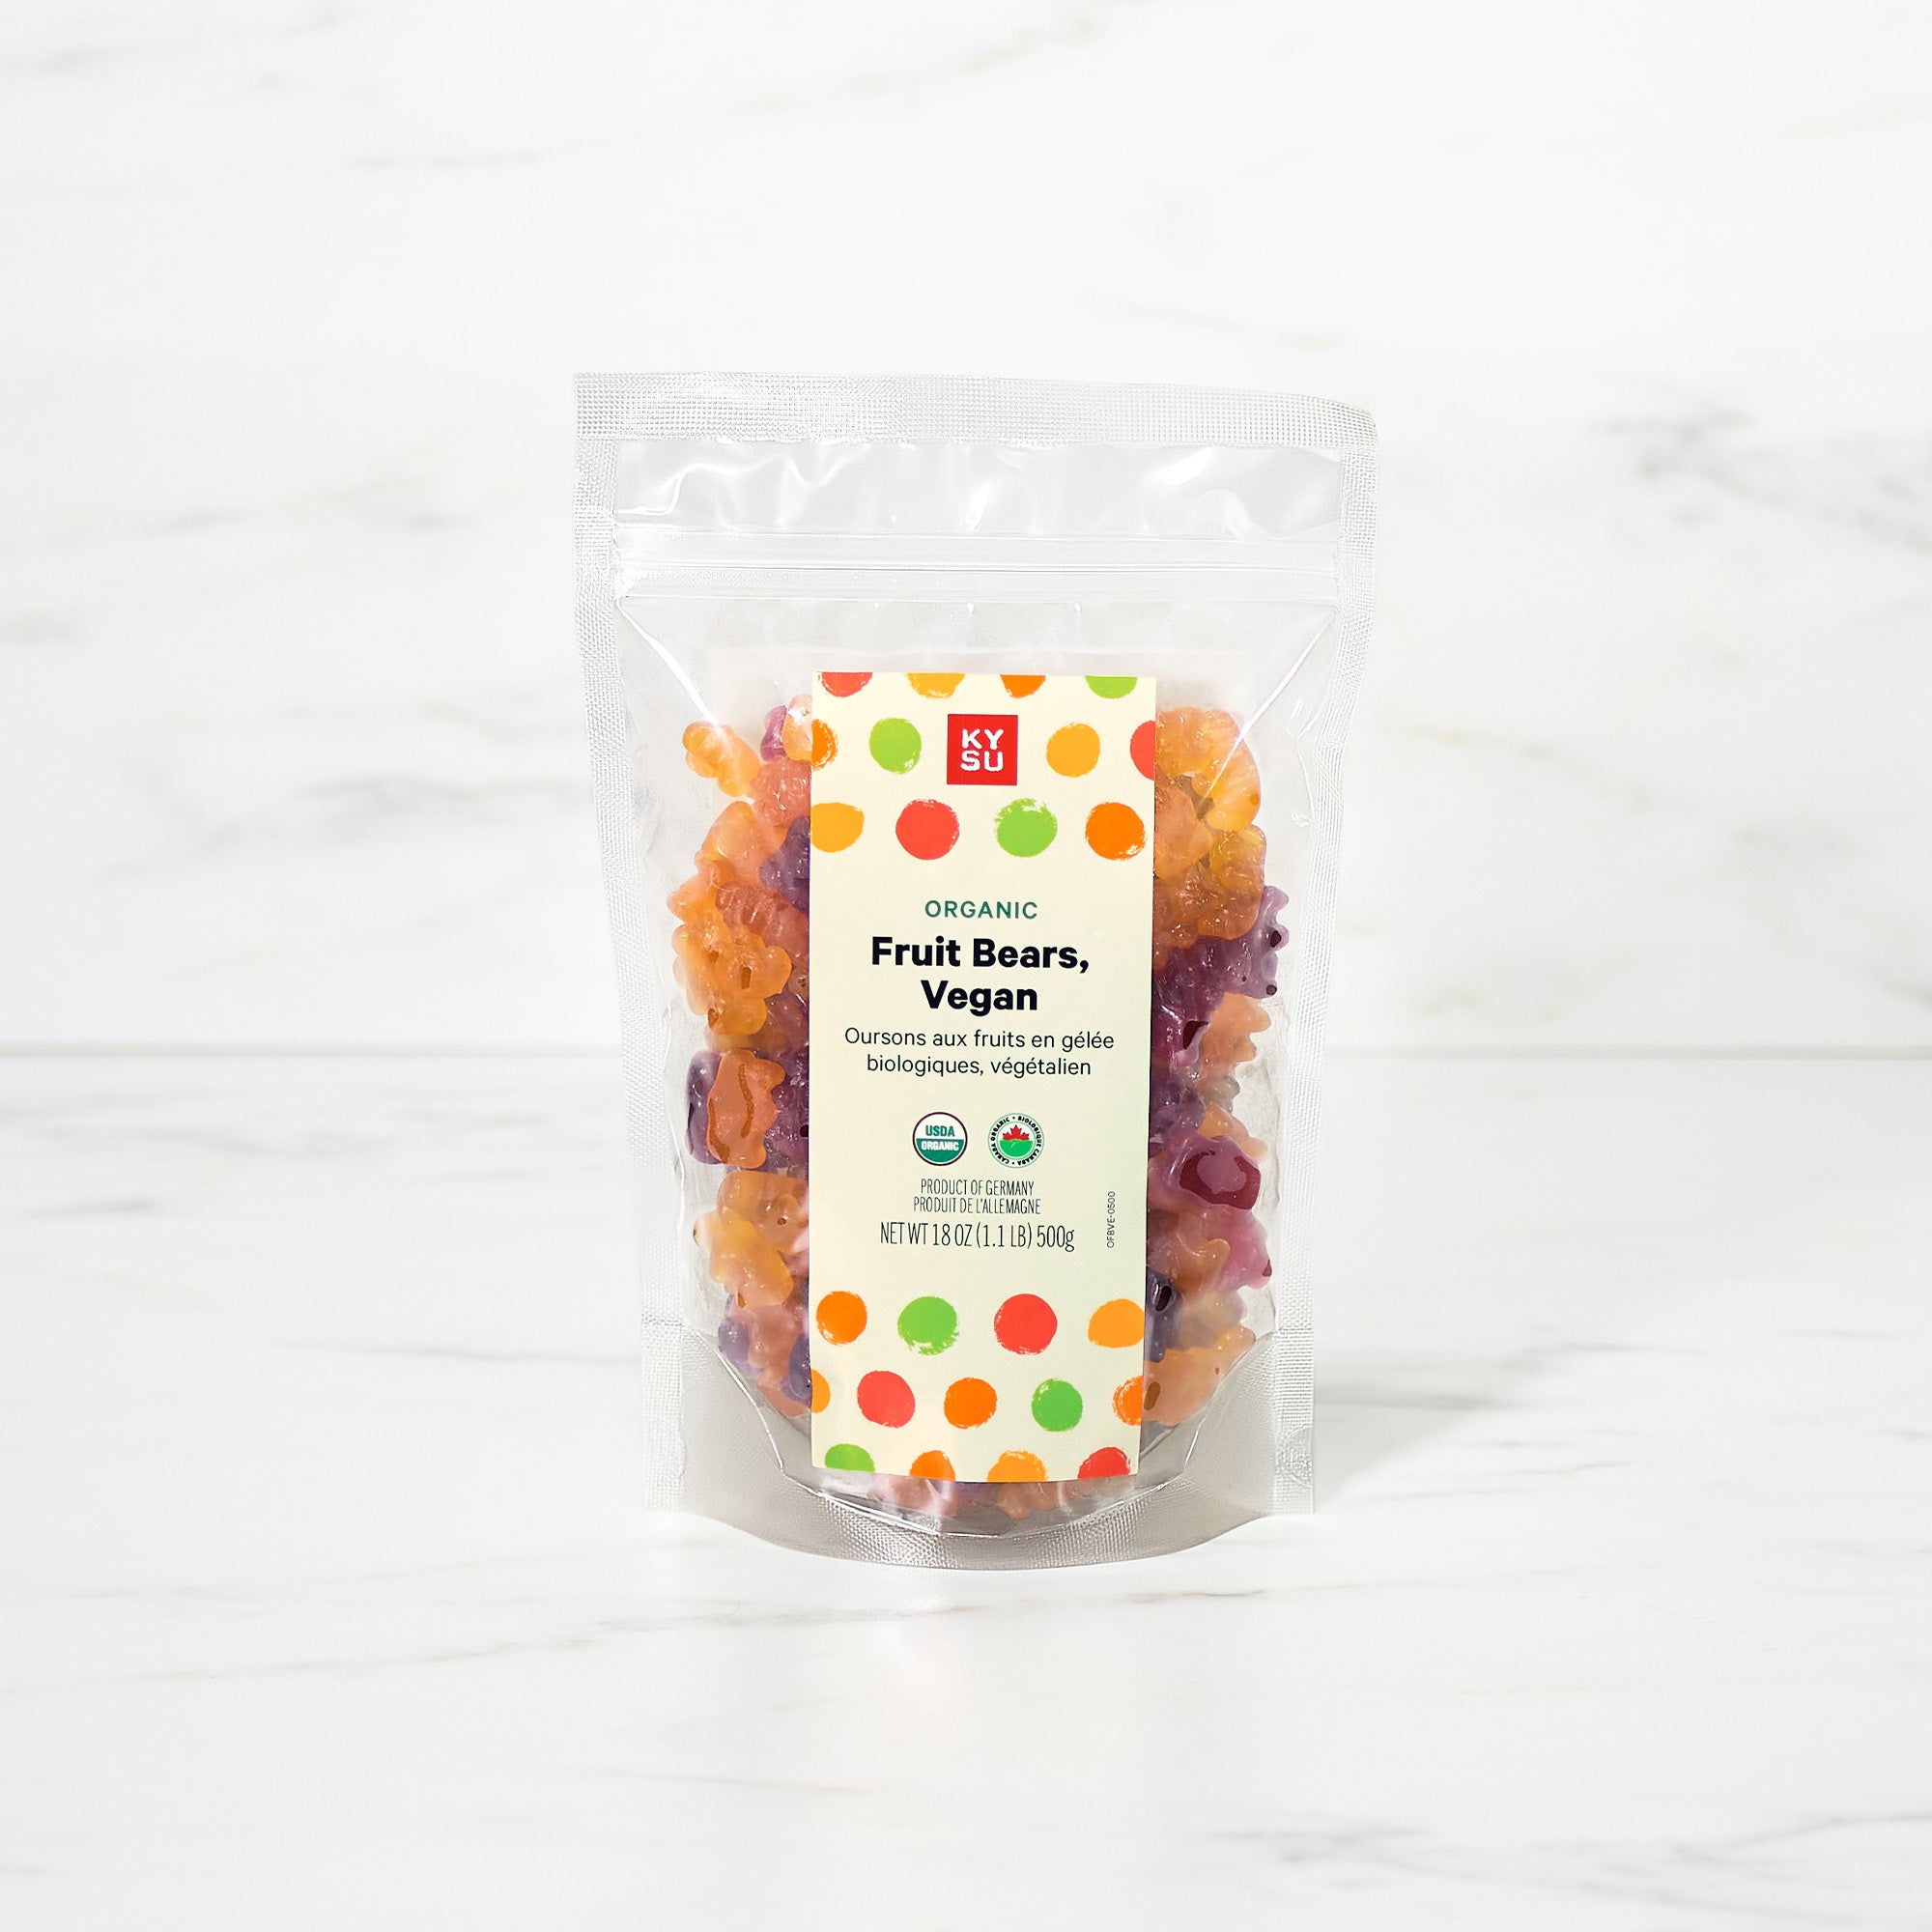 Organic Fruit Bears, Vegan, 00 g (1.1 lb)